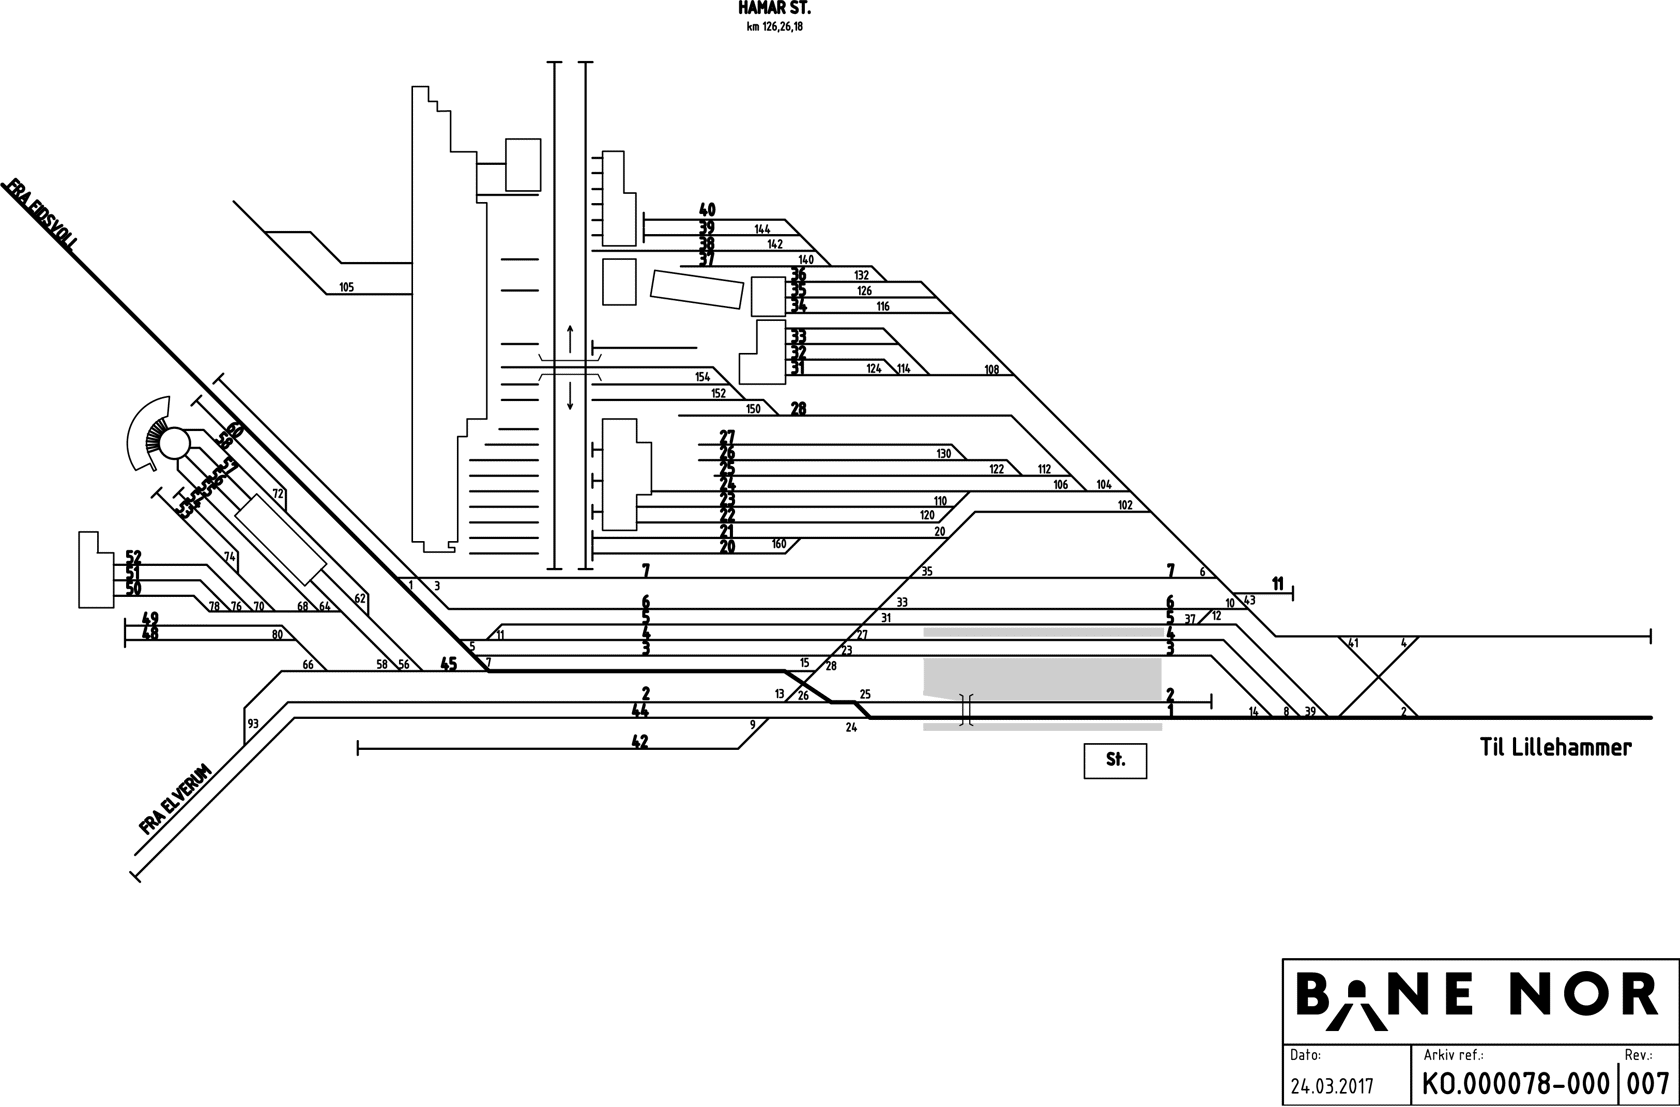 Track plan Hamar station